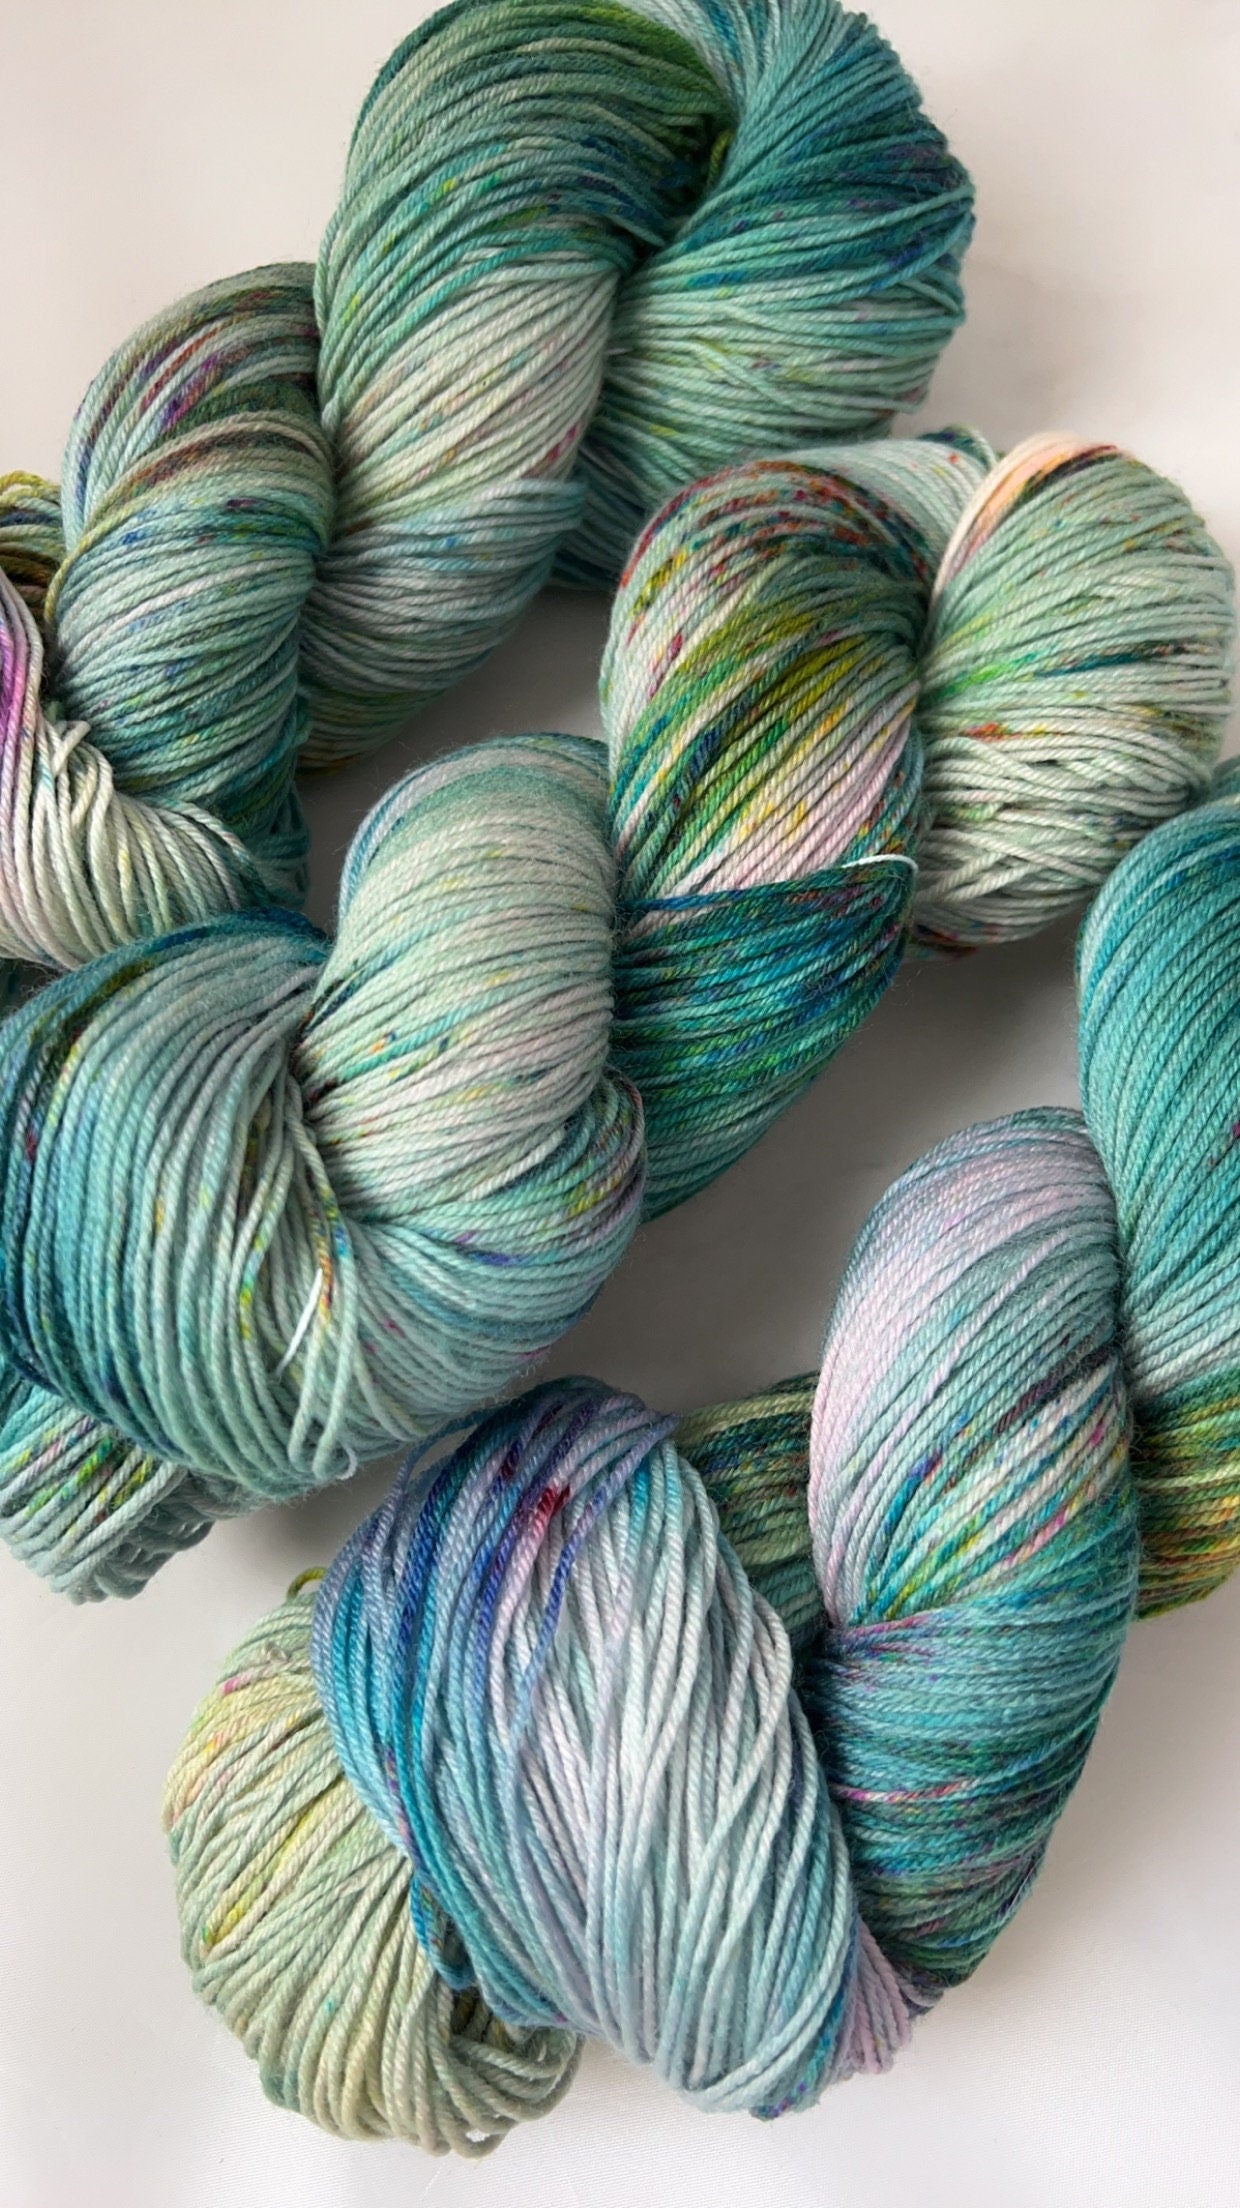 Hand-Dyed Merino Wool Yarn - Soft and Durable Yarn for Knitting and Crocheting | Indie Dyed Merino Wool | Fingering | La Isla Bonita